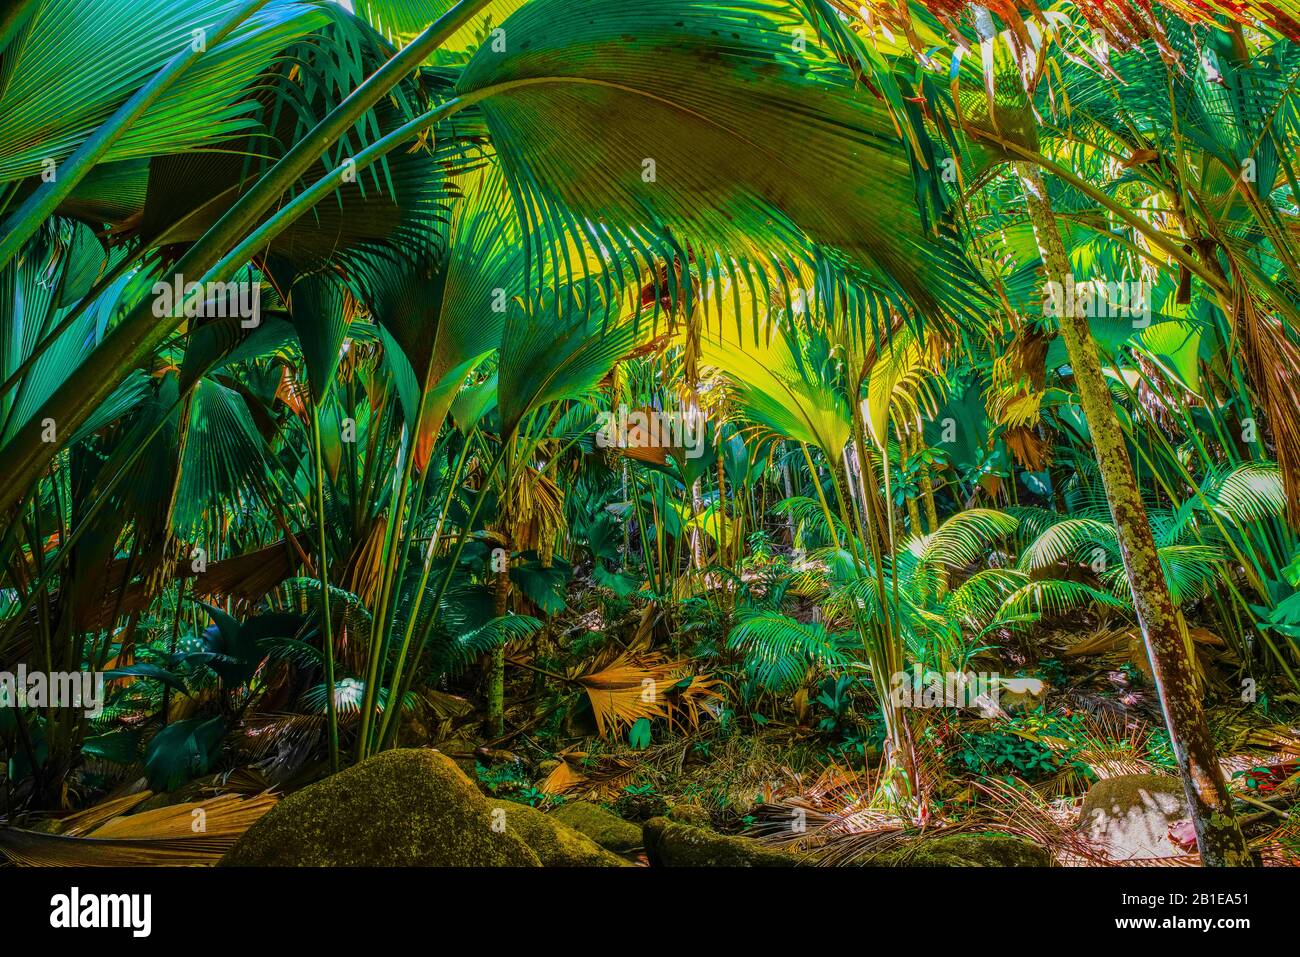 Latannyen lat (Verschaffeltia splendida) or Stilt Palm in Vallée de Mai Nature Reserve, Praslin Island, Seychelles. UNESCO World Heritage. Stock Photo